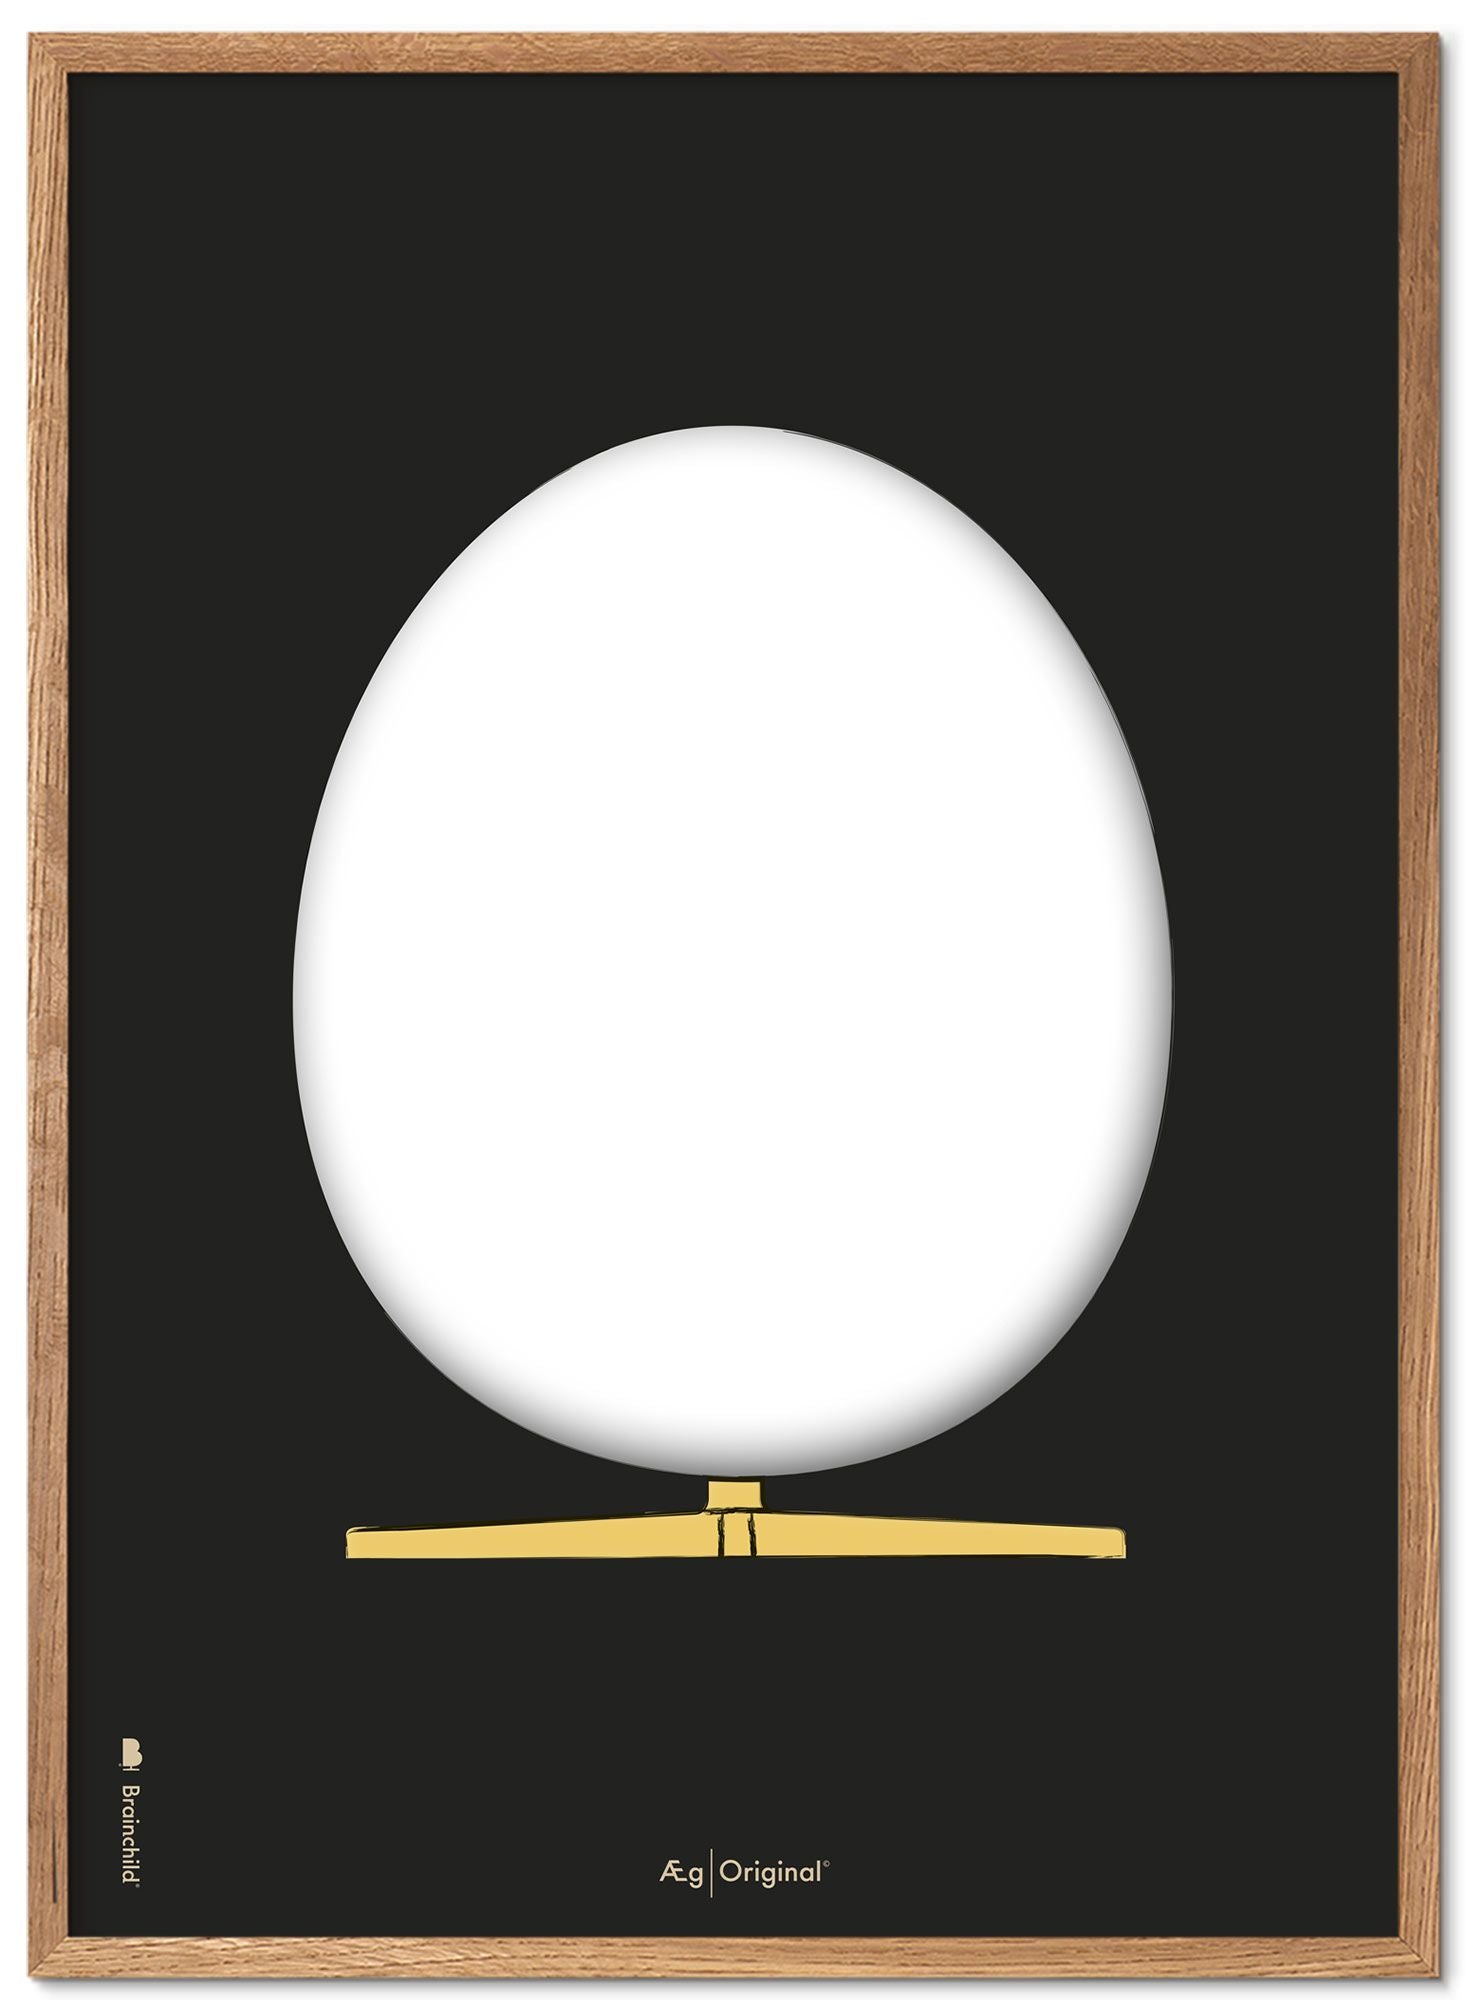 Brainchild The Egg Design Sketch Poster Frame Made Of Light Wood 70x100 Cm, Black Background